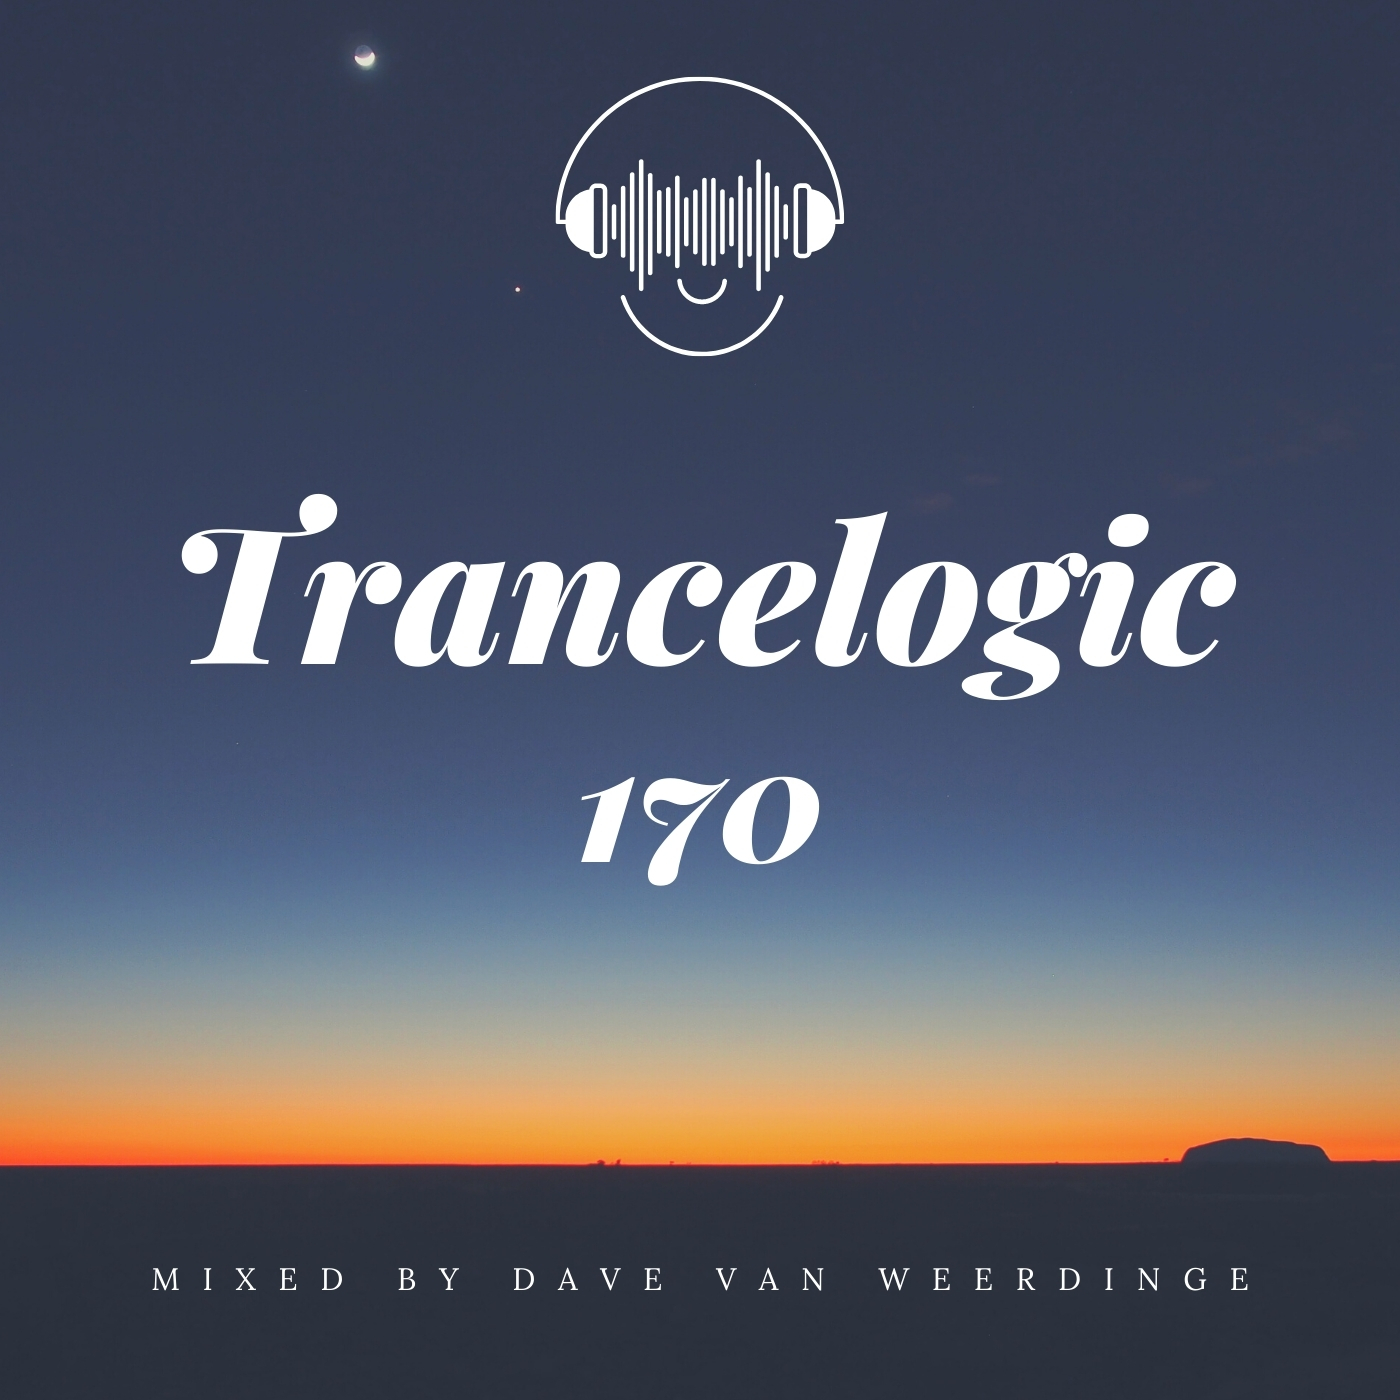 Trancelogic 170 by Dave van Weerdinge